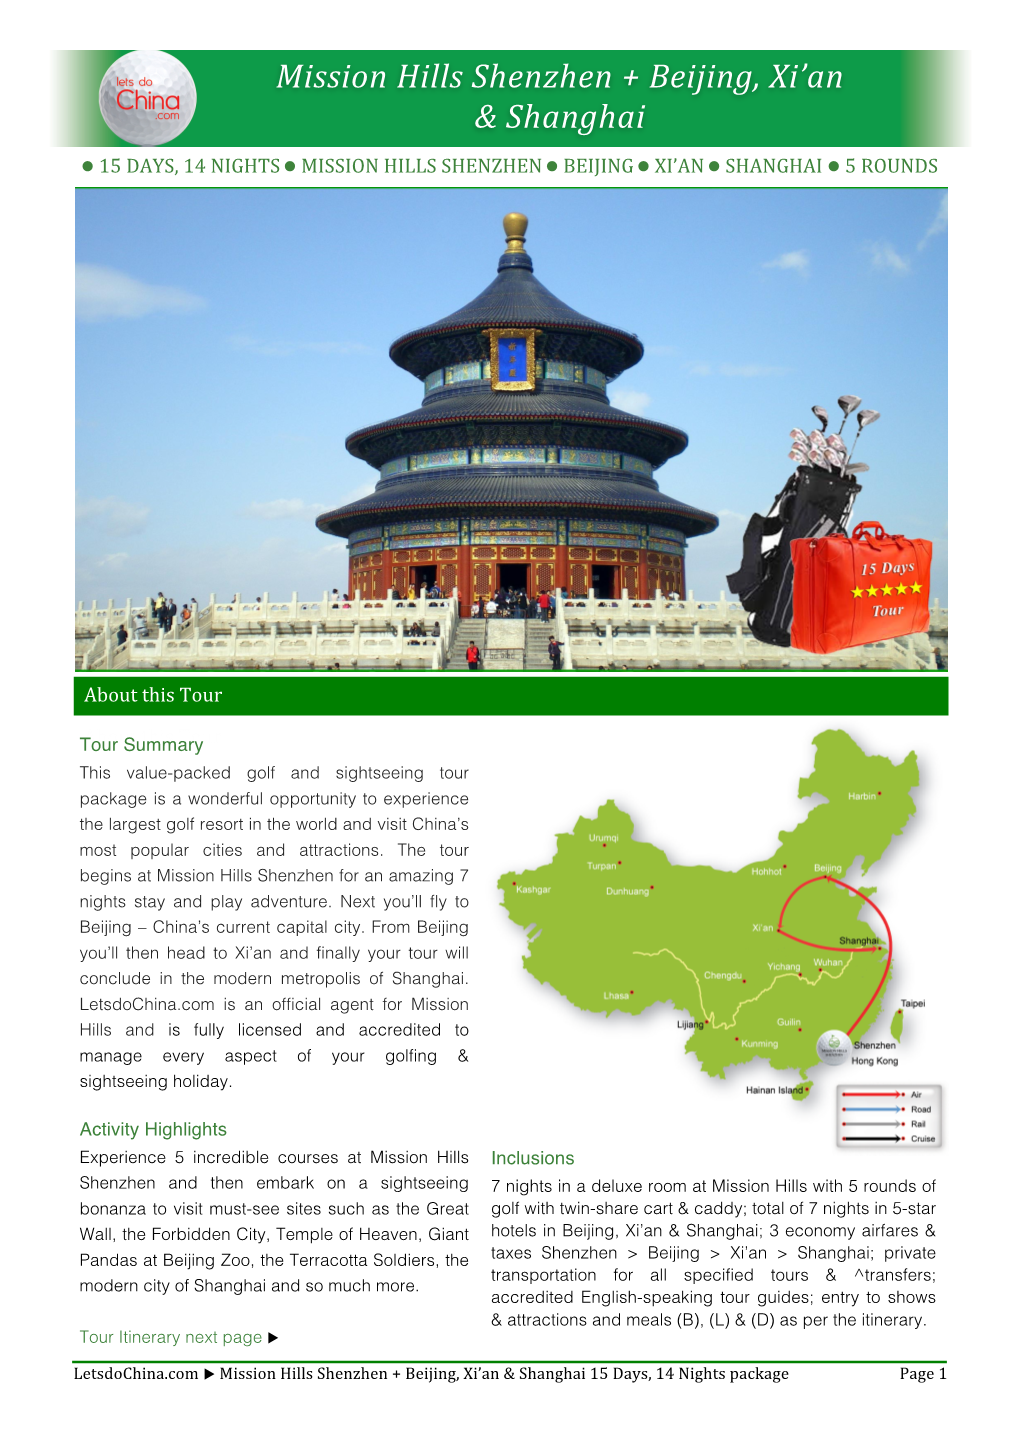 Mission Hills Shenzhen + Beijing, Xi'an & Shanghai Tour Brochure